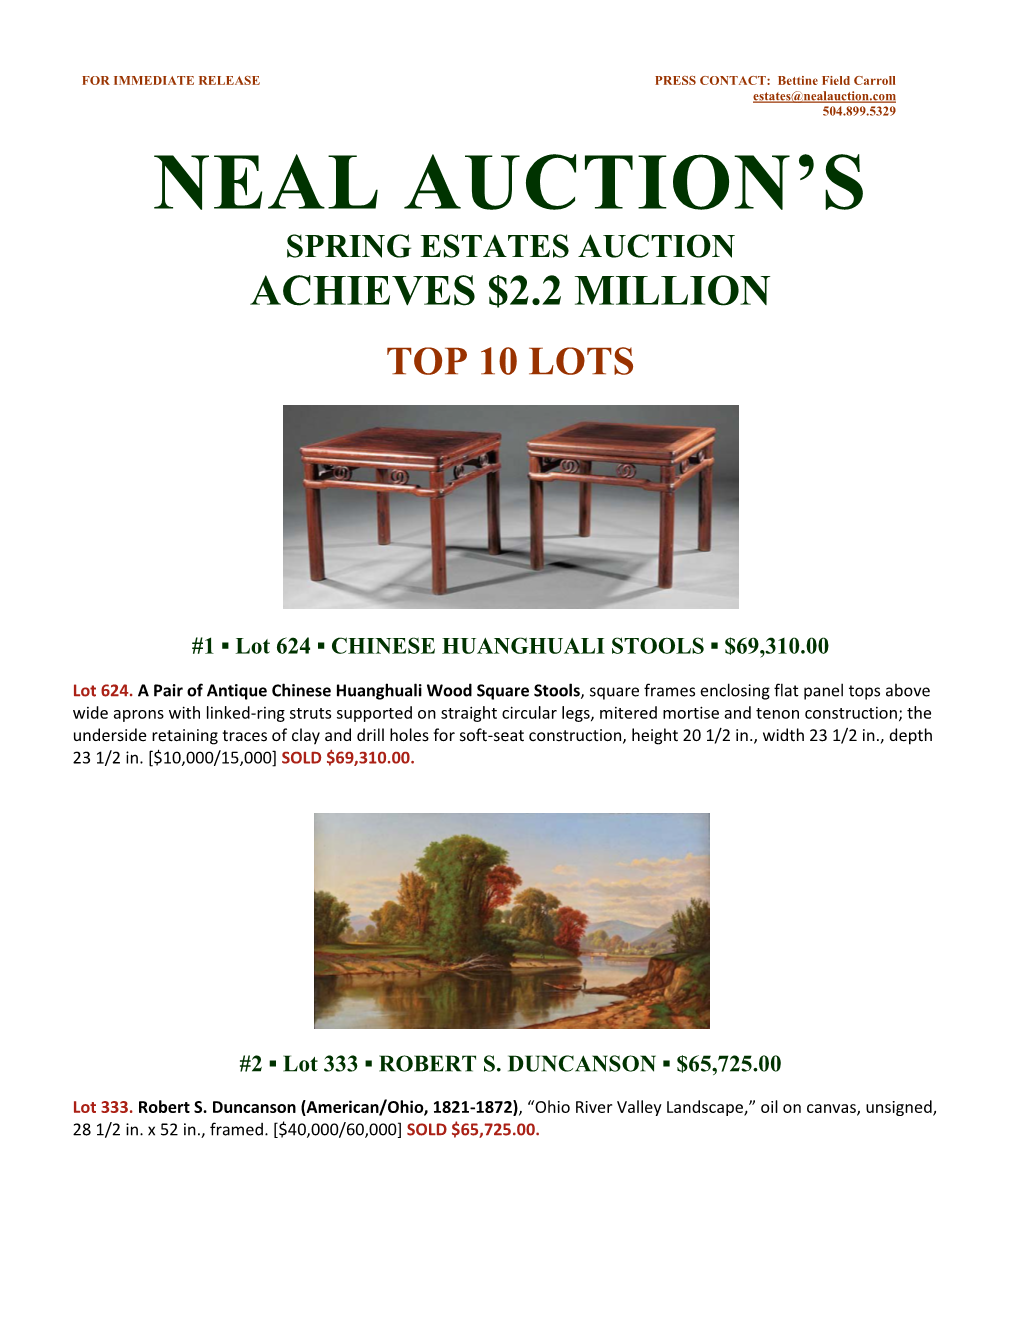 Neal Auction's Spring Estates Auction Achieves $2.2 Million Top 10 Lots